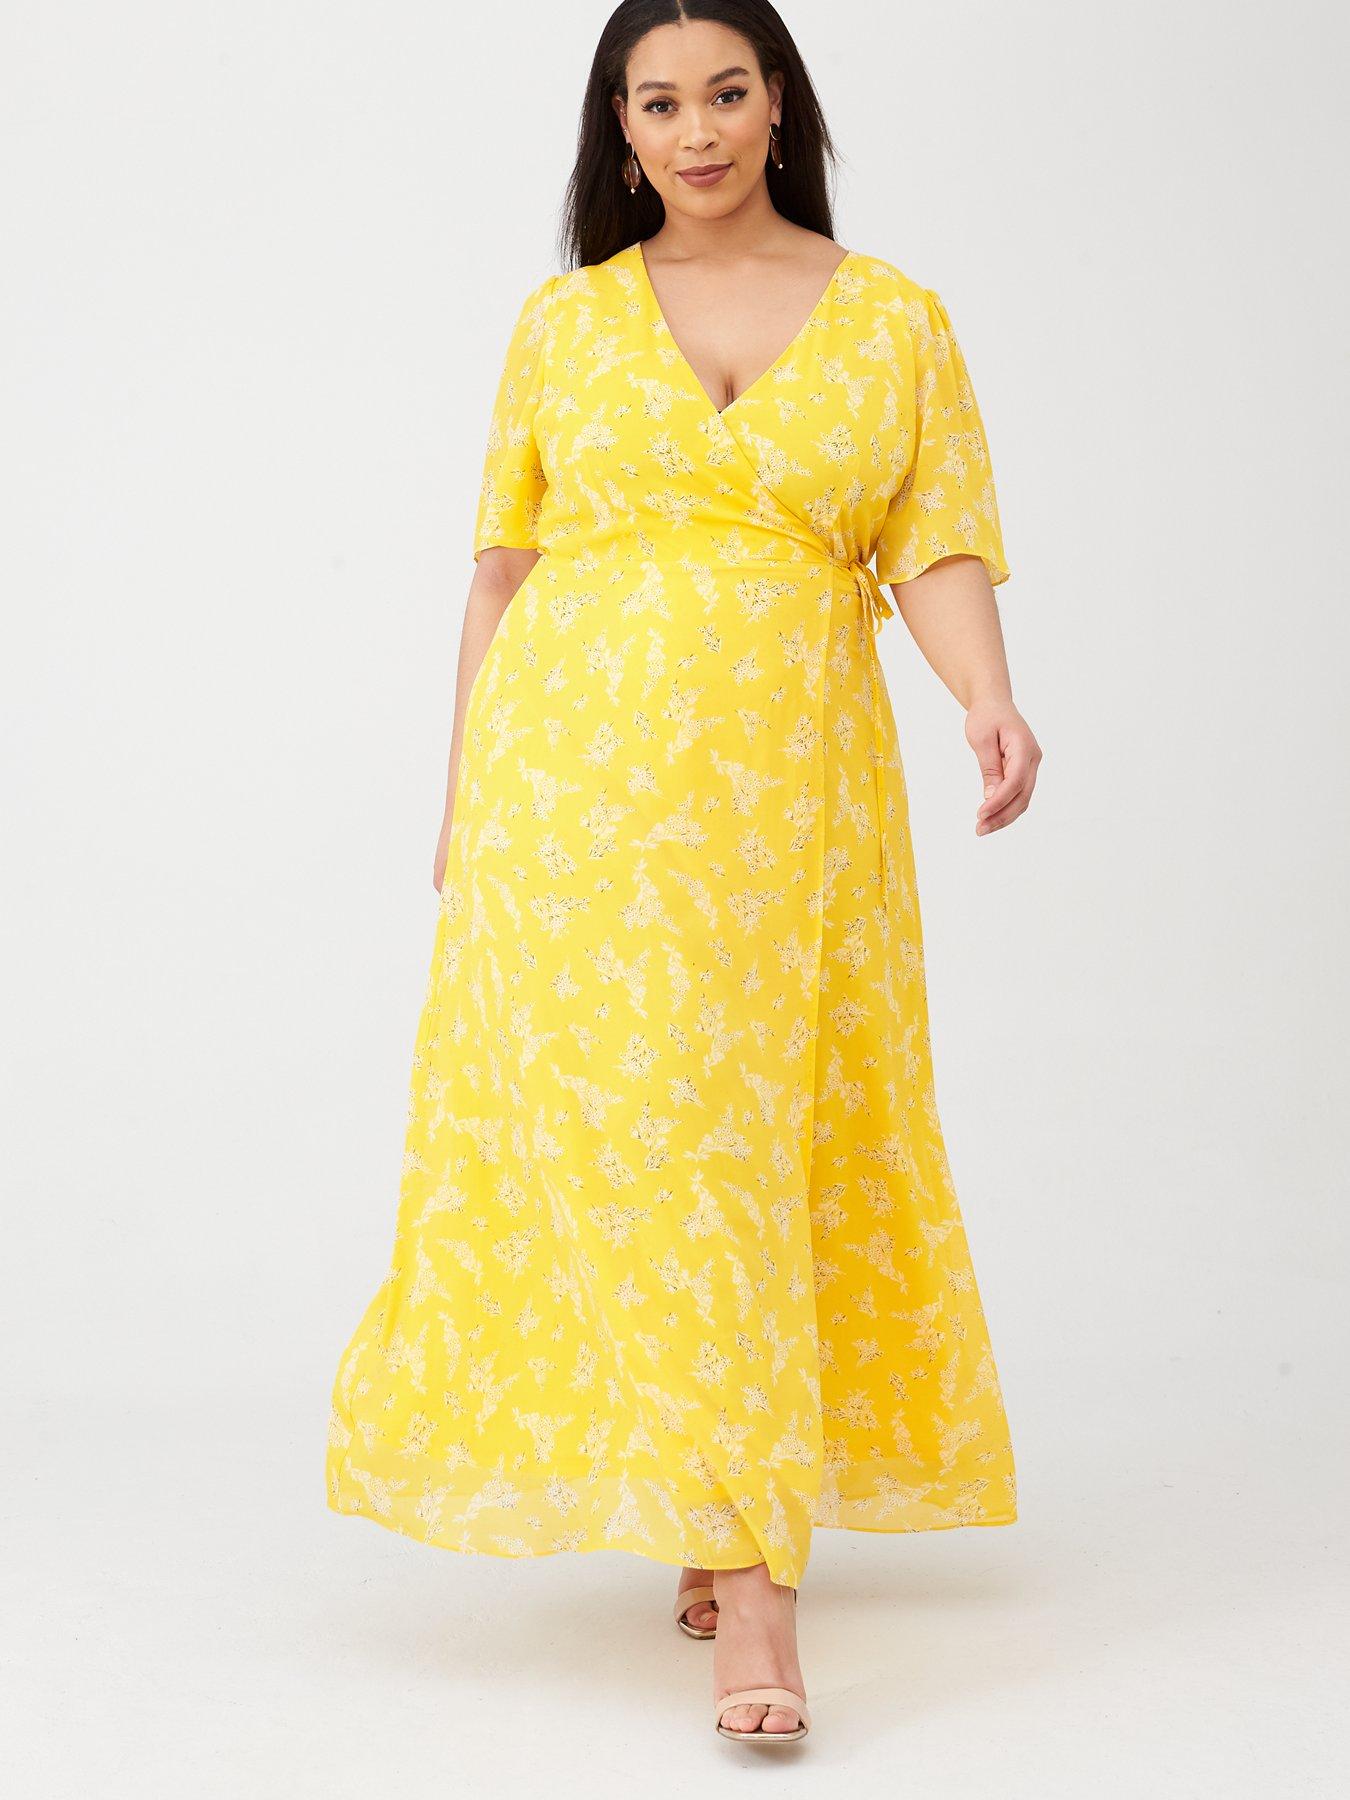 yellow tea dress